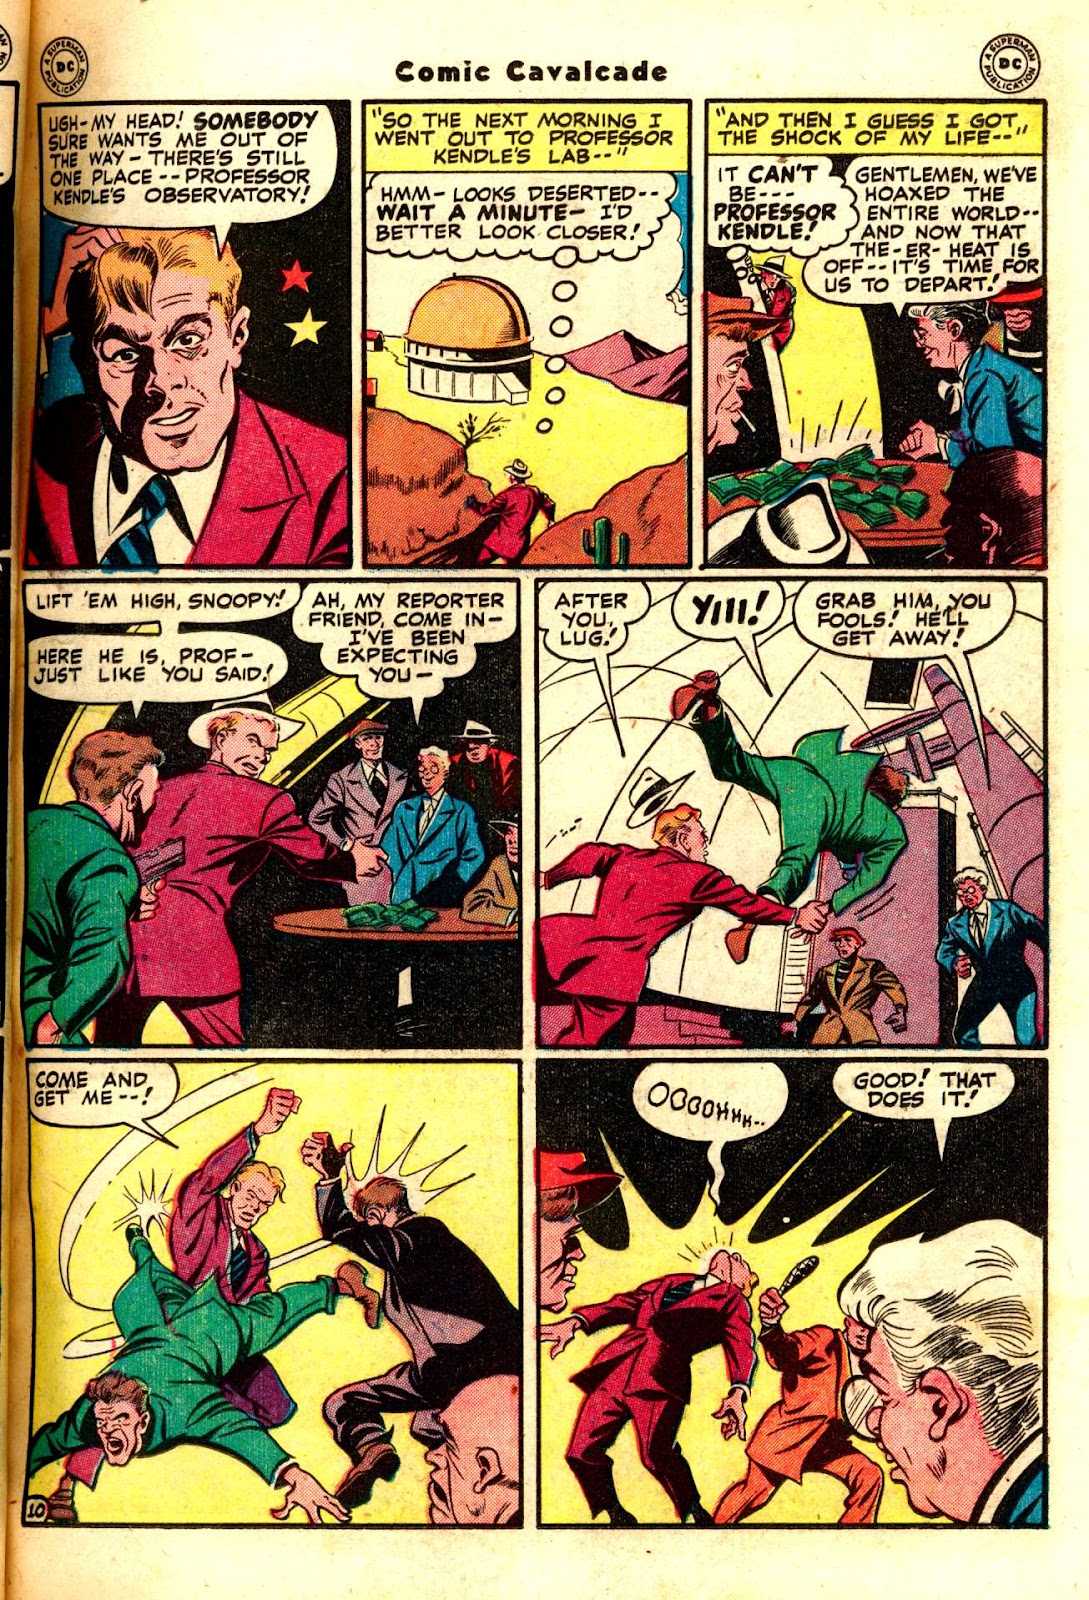 Comic Cavalcade issue 24 - Page 27